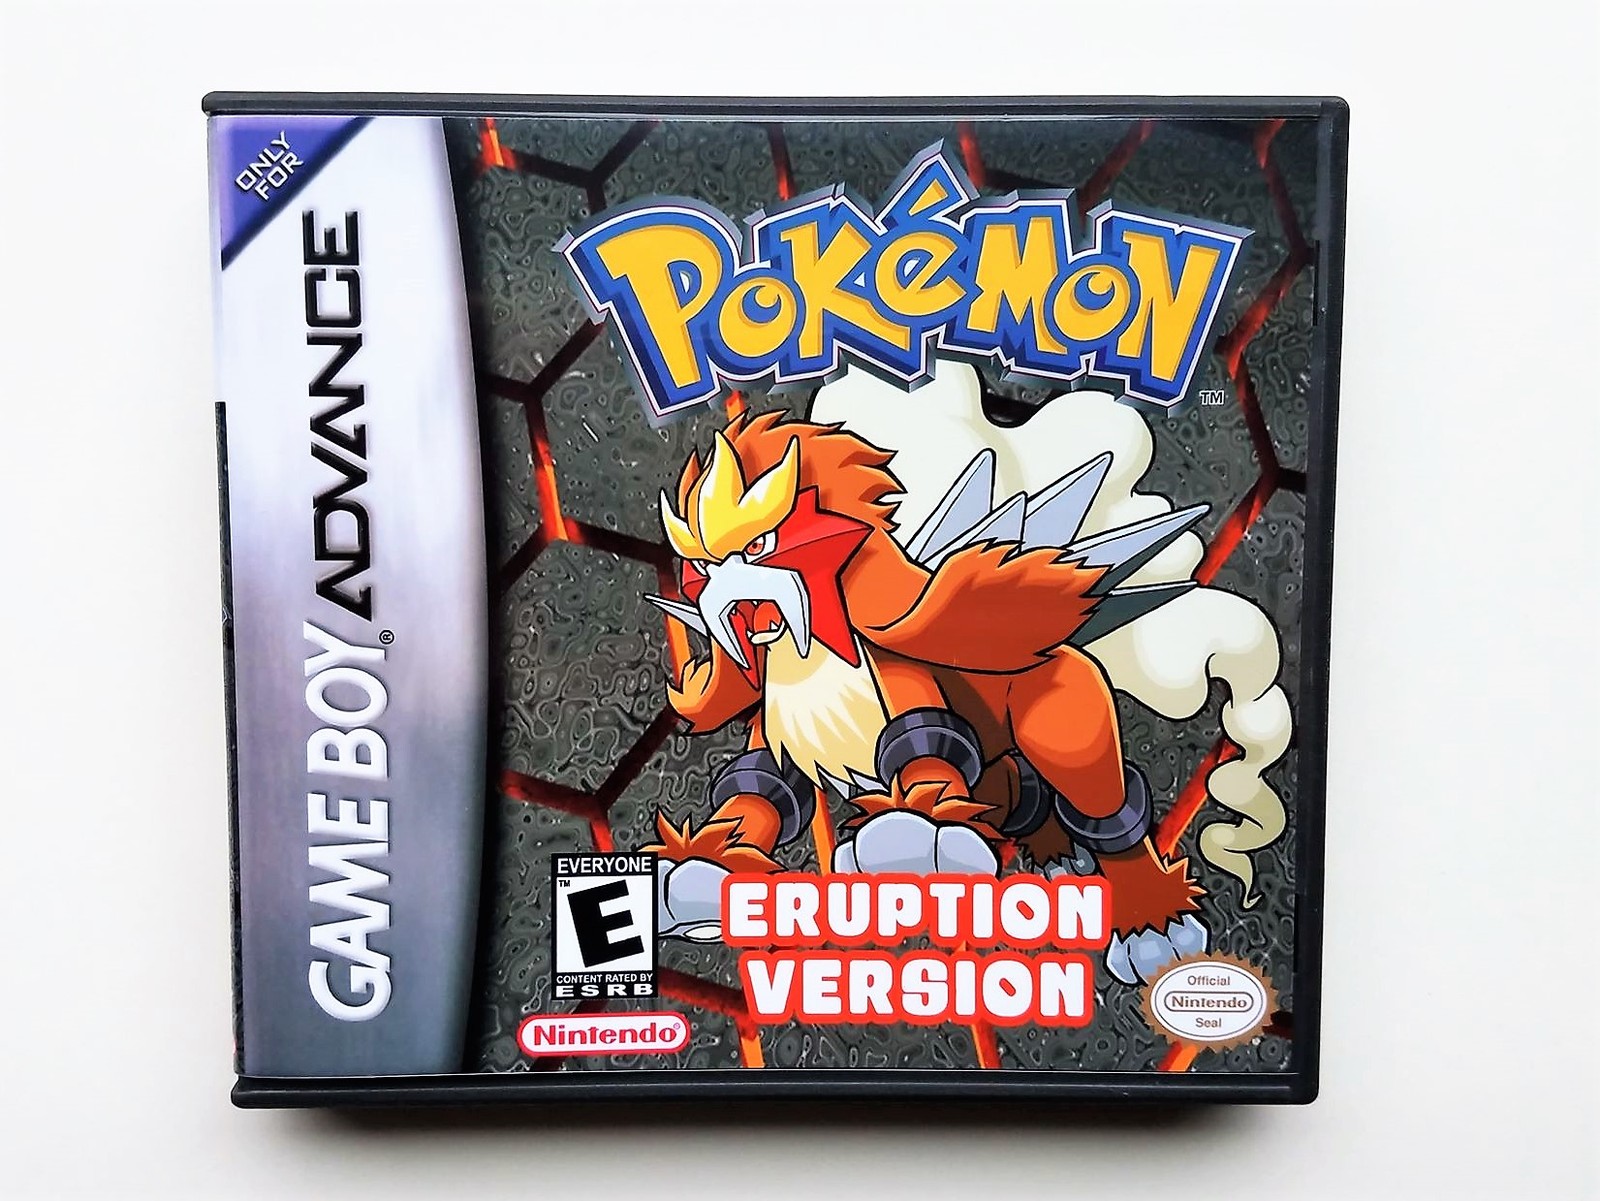 Pokemon Eruption Game / Case - Gameboy Advance (GBA) USA Seller